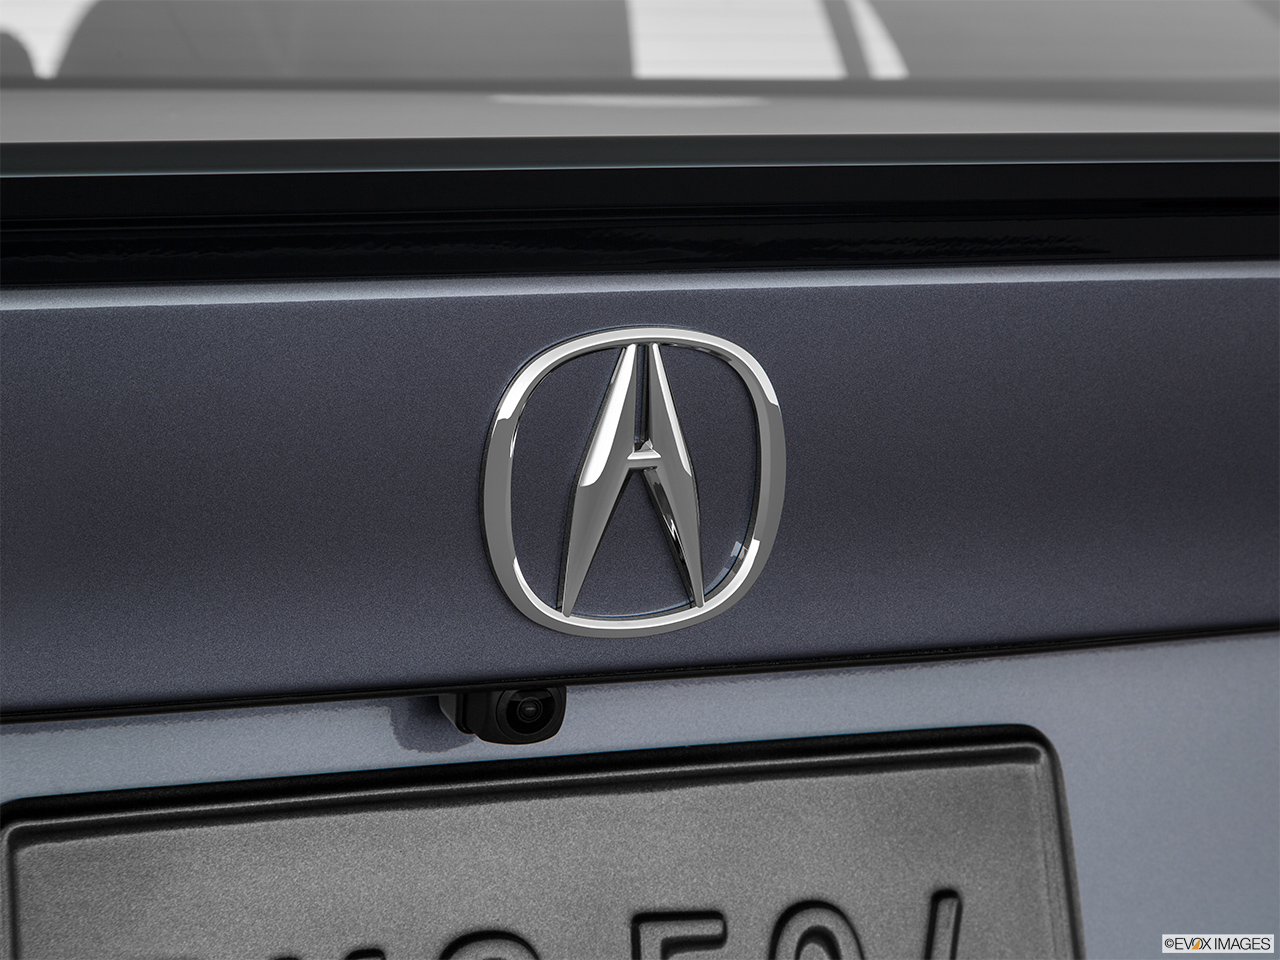 2019 Acura TLX 3.5L Rear manufacture badge/emblem 